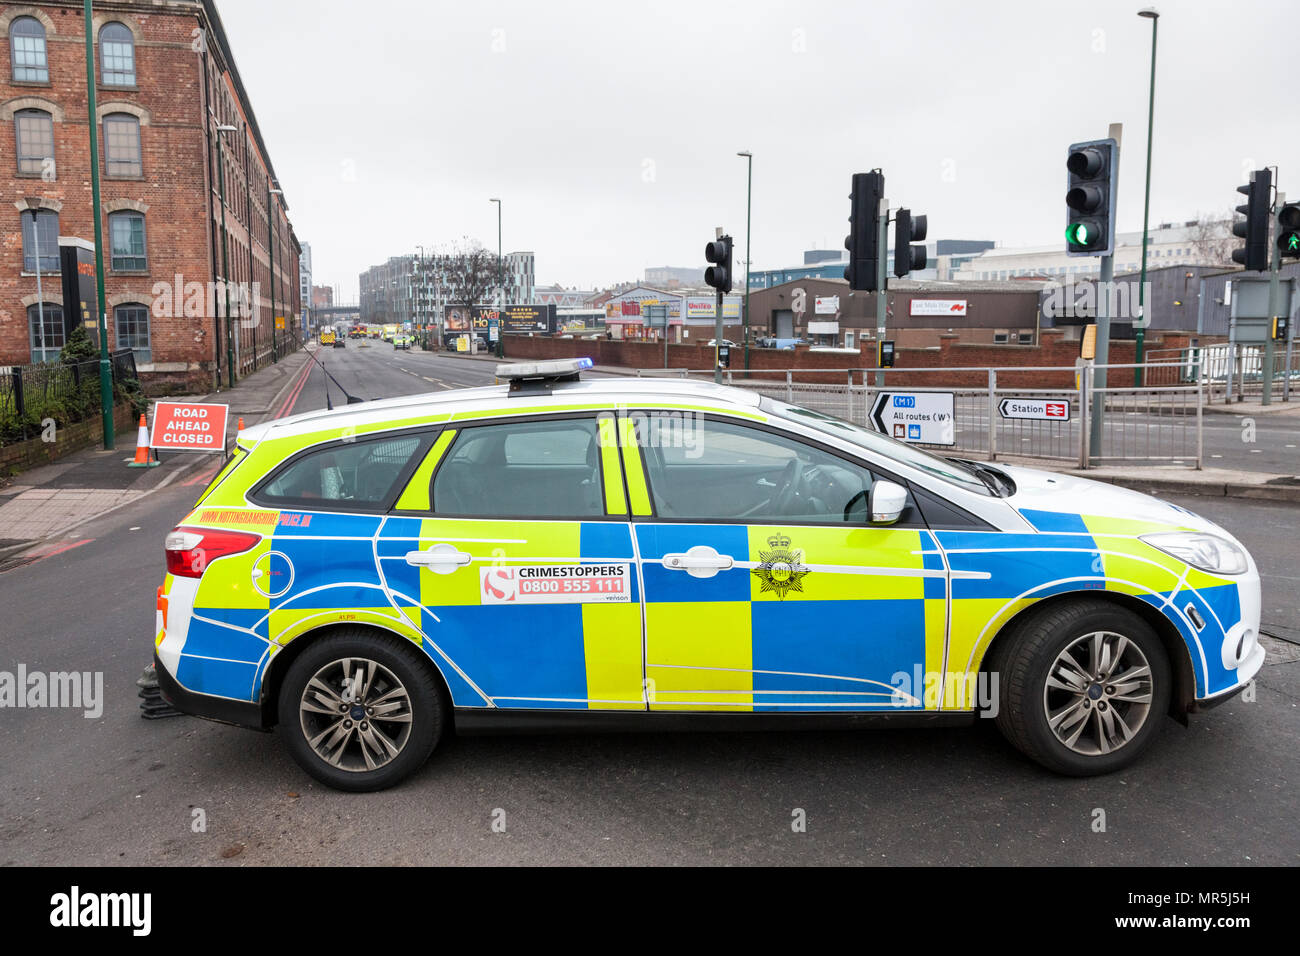 Road block. Police car blocking a street preventing entry, Nottingham, England, UK Stock Photo